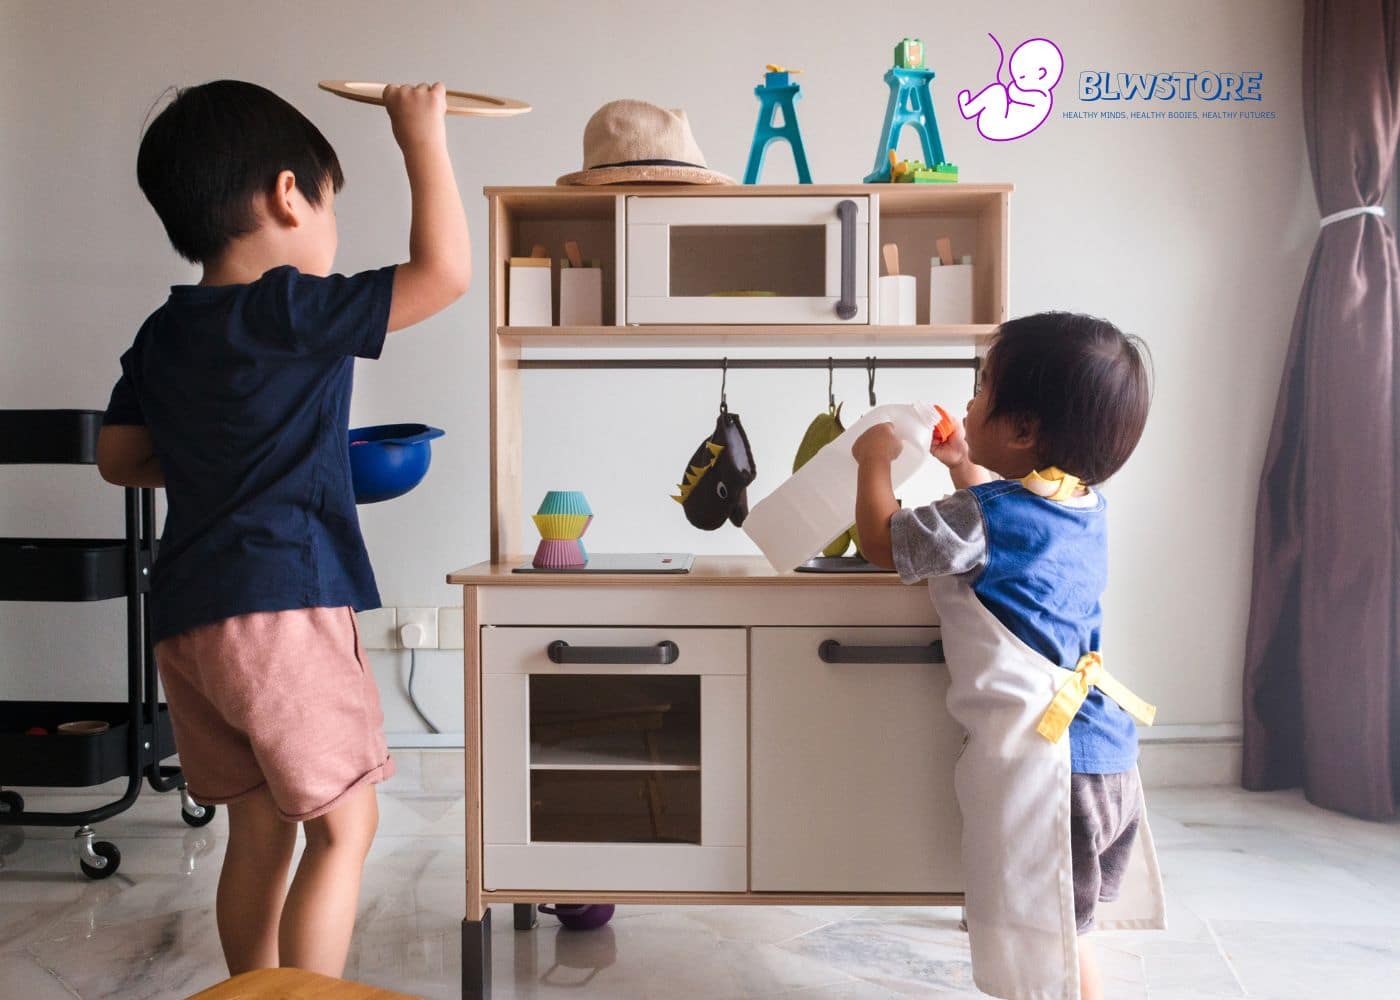 Montessori Natural Wooden Kitchen Toy Set – Oliver & Company Montessori Toys